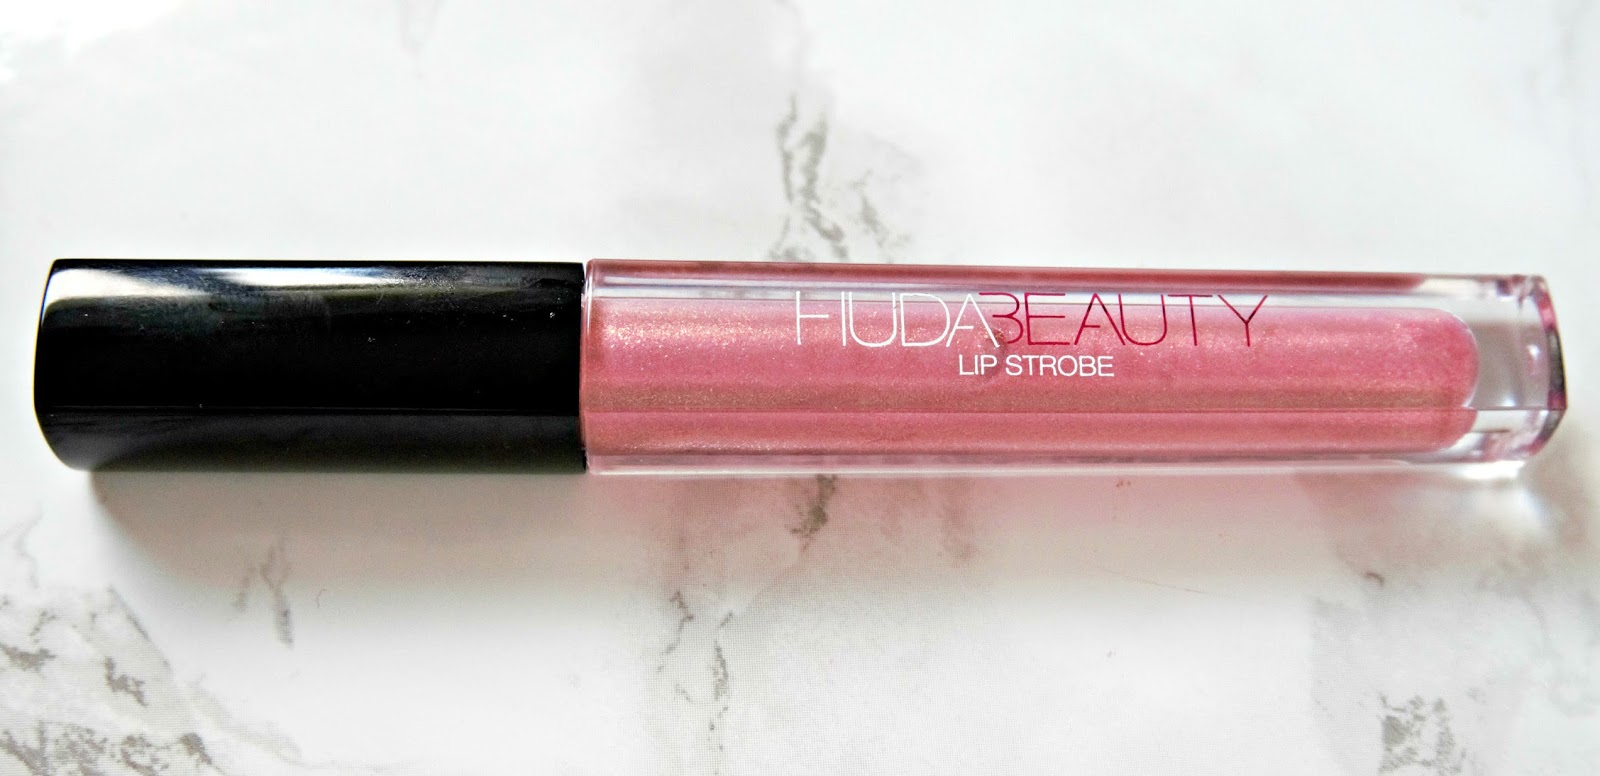 Huda Beauty Lip Strobe, Snobby, Review